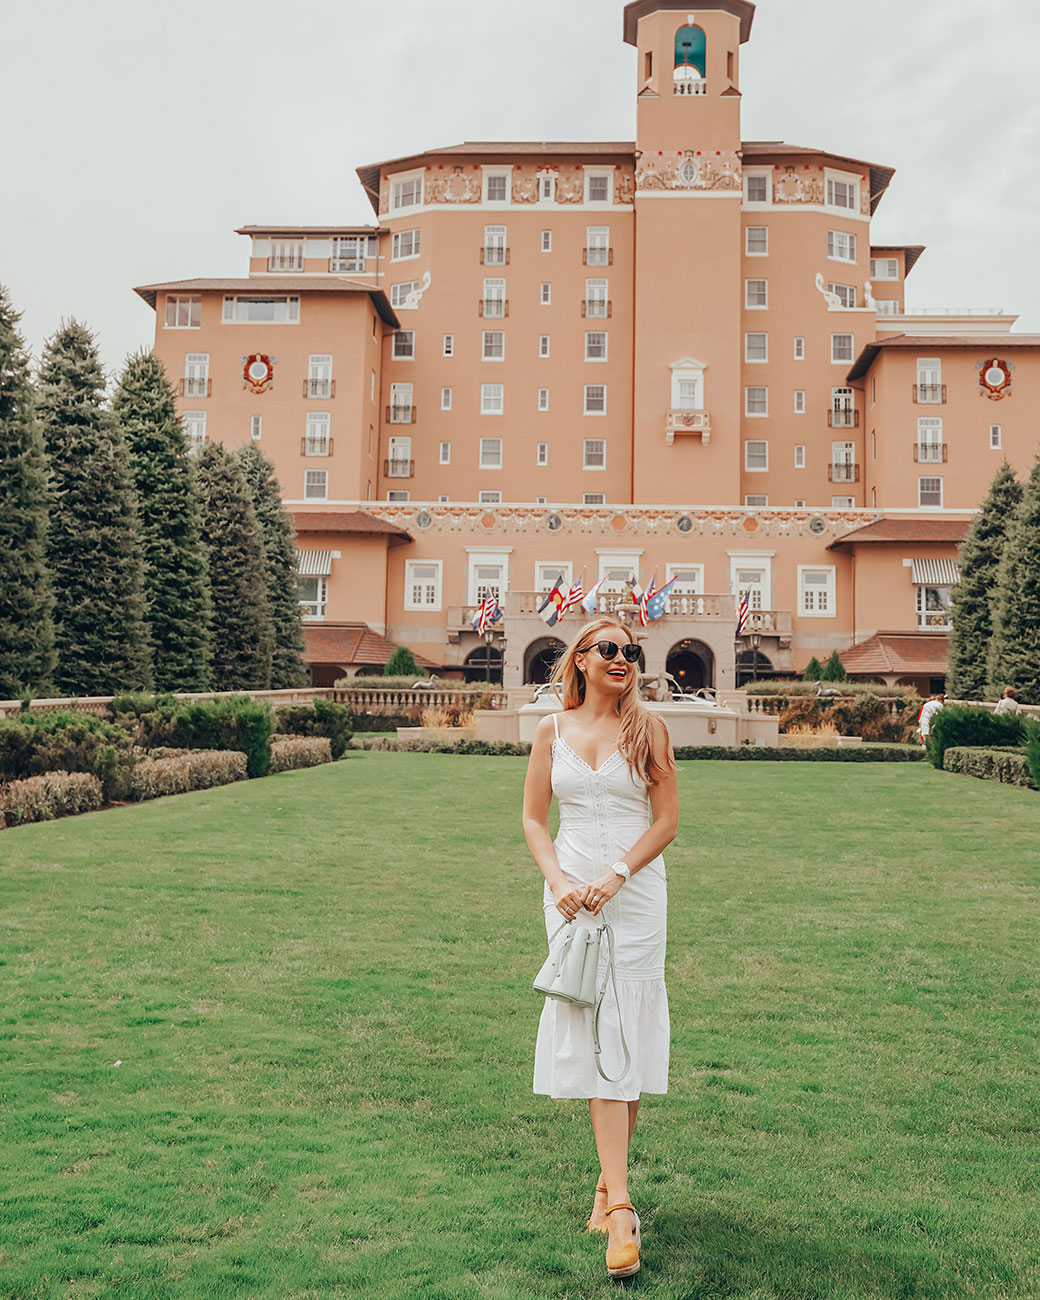 The Broadmoor | The Broadmoor hotel | The Broadmoor resort | Colorado Springs resorts | Things to do at The Broadmoor | Travel Blogger | Bubbly Moments | Emilia Taneva